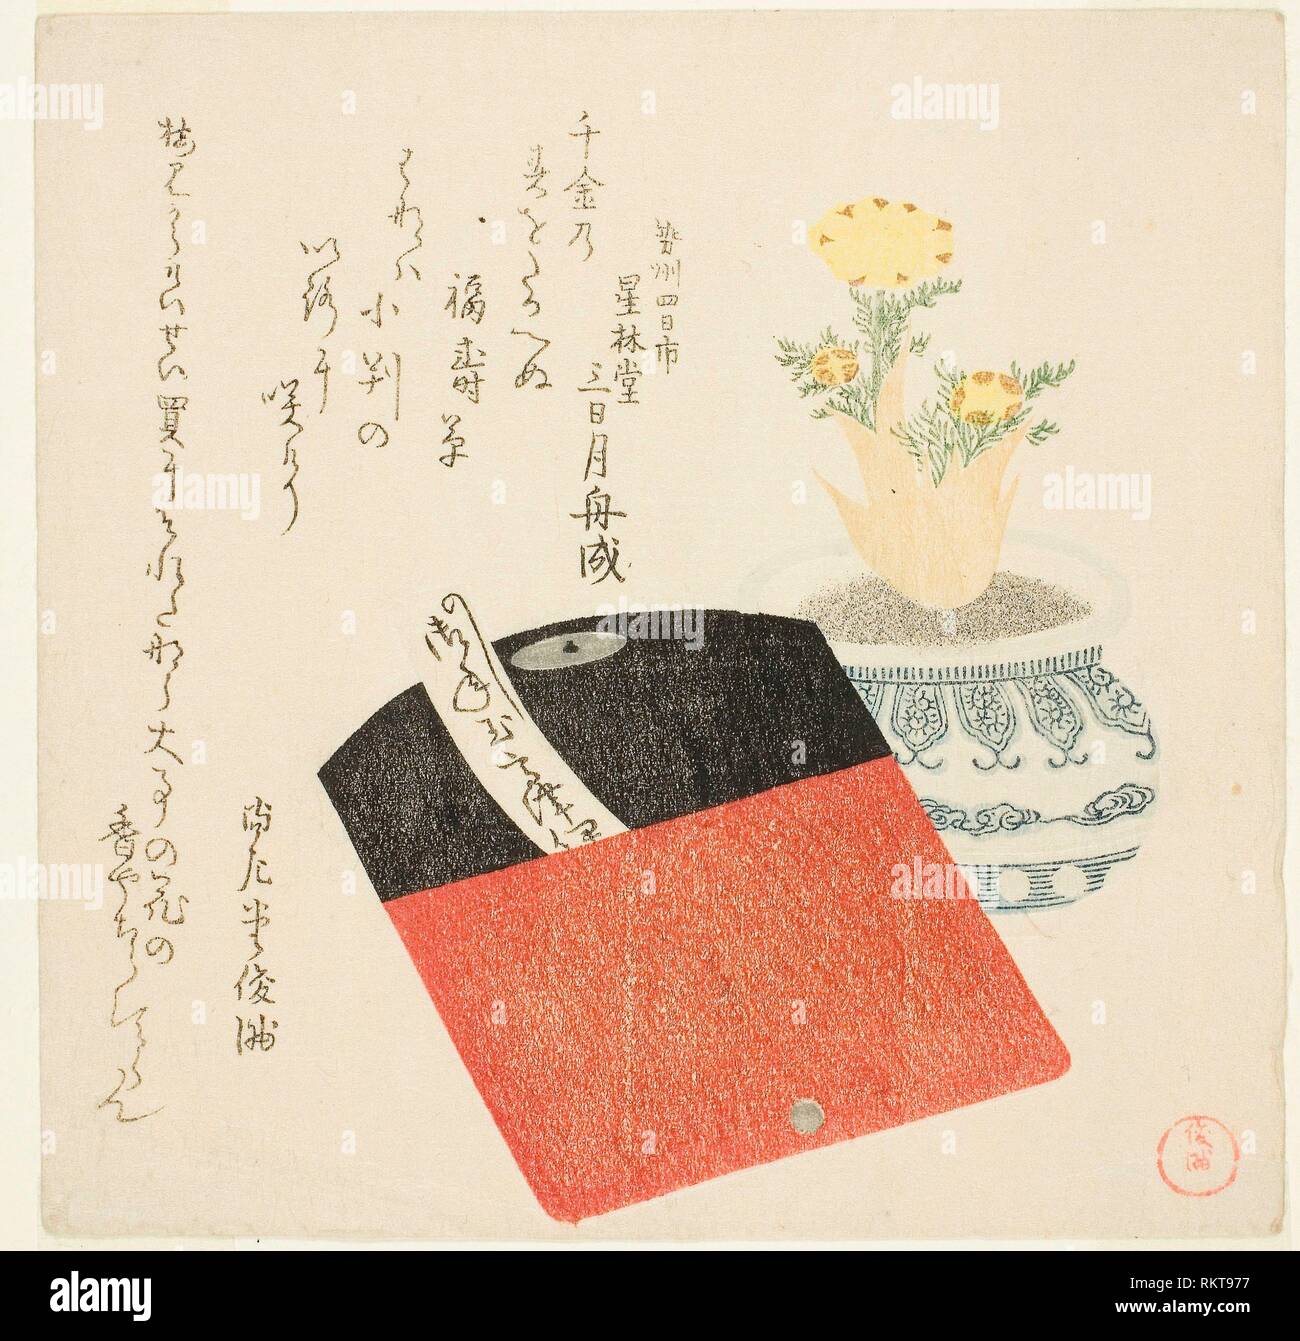 Kubo Shunman. Portamonete e vaschette di Adonis - c. 1802 - Kubo Shunman  giapponese, 1757 - 1820. Stampa a blocchi di legno a colori; shikishiban,  surimono. 1797 - 1807 Foto stock - Alamy